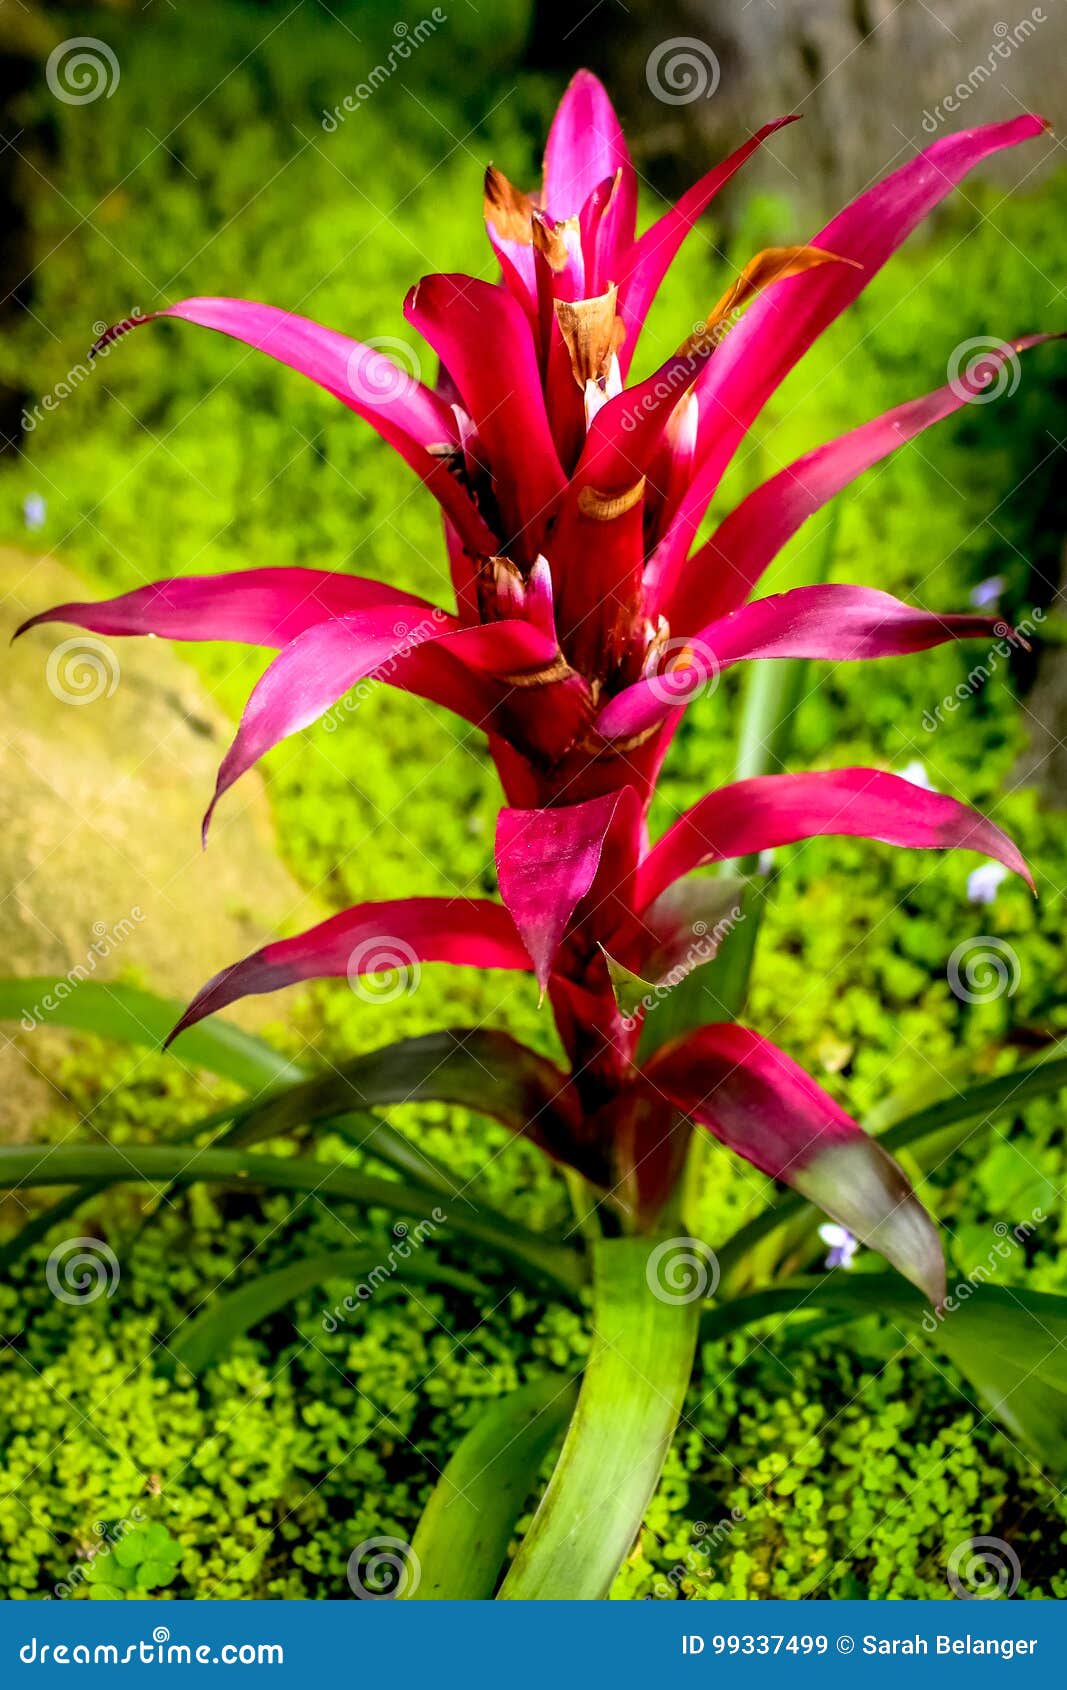 Tropical Flower At San Diego S Meditation Garden Stock Image